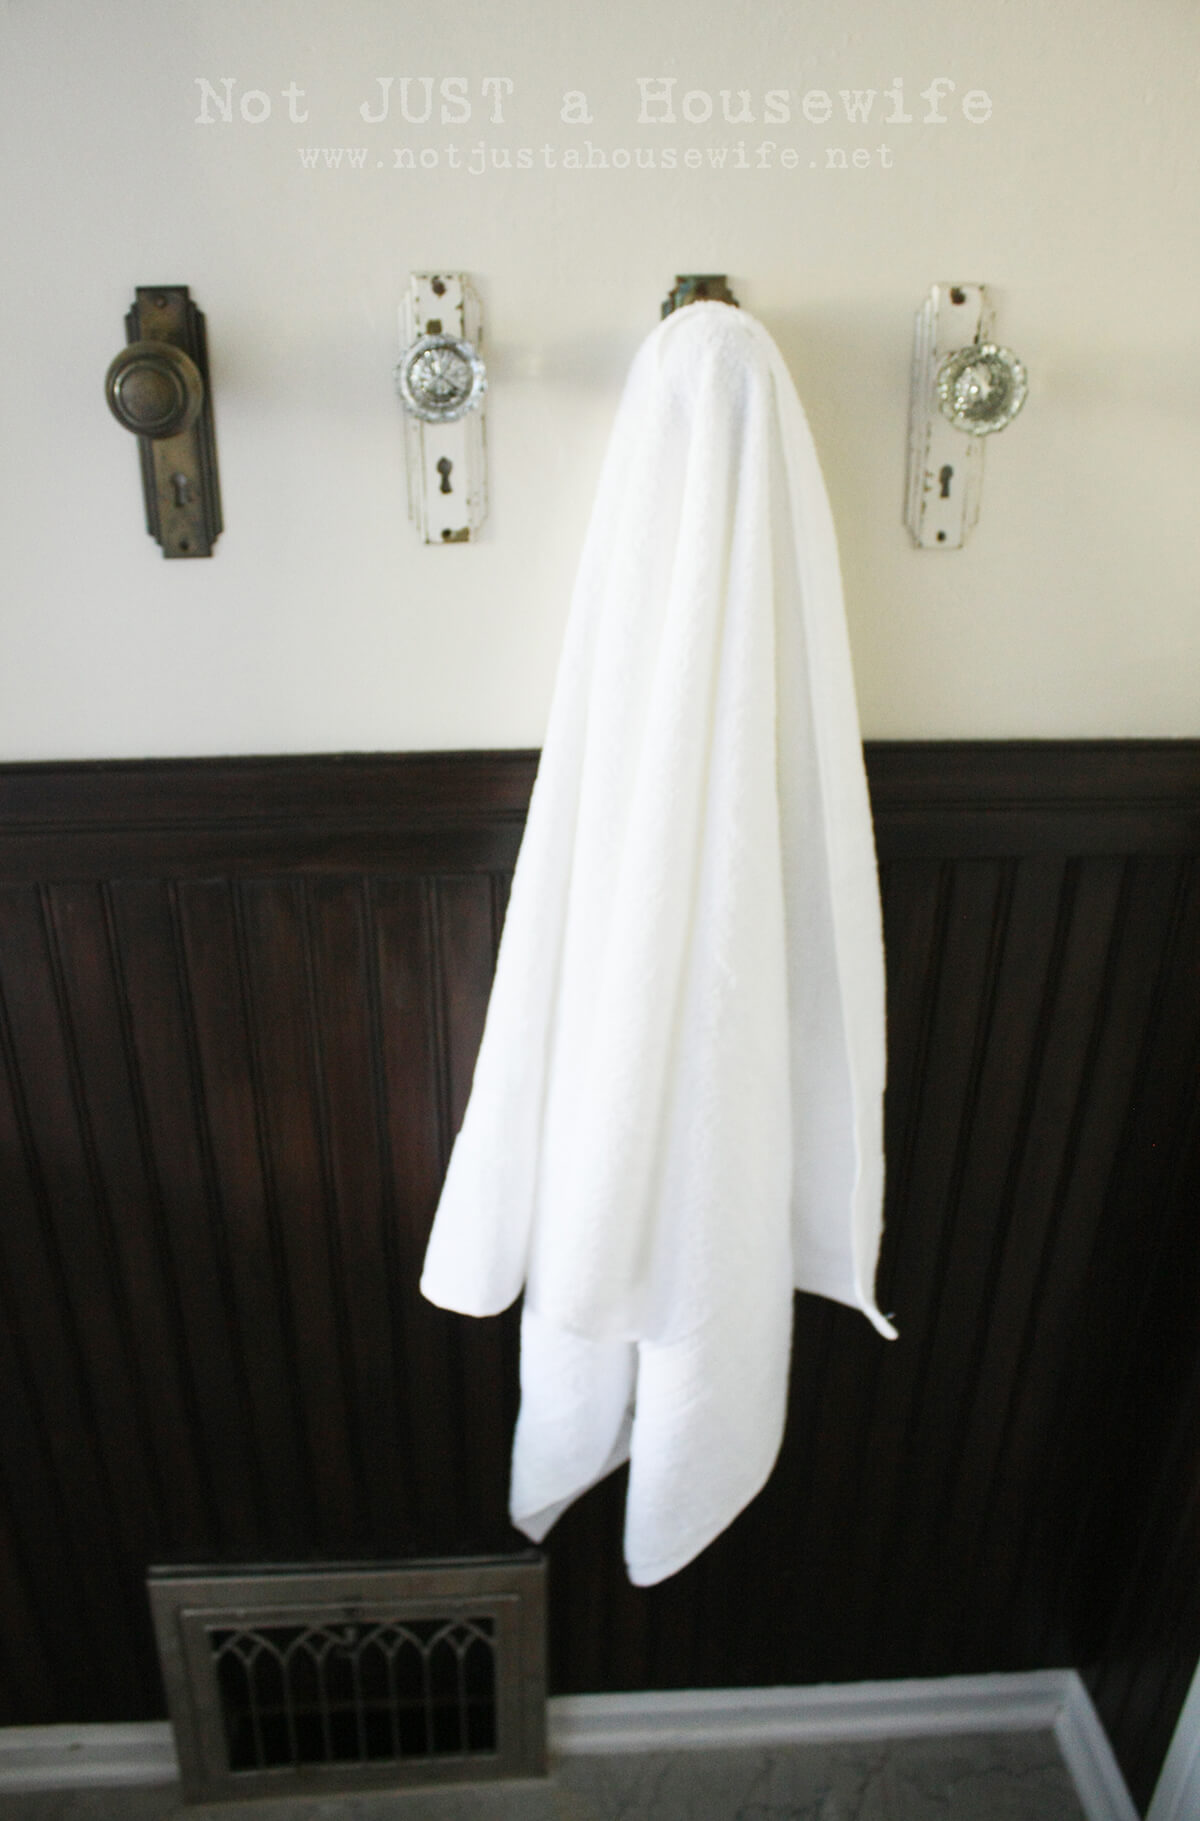 Doorknob Towel Hooks - Recyclable and Reusable